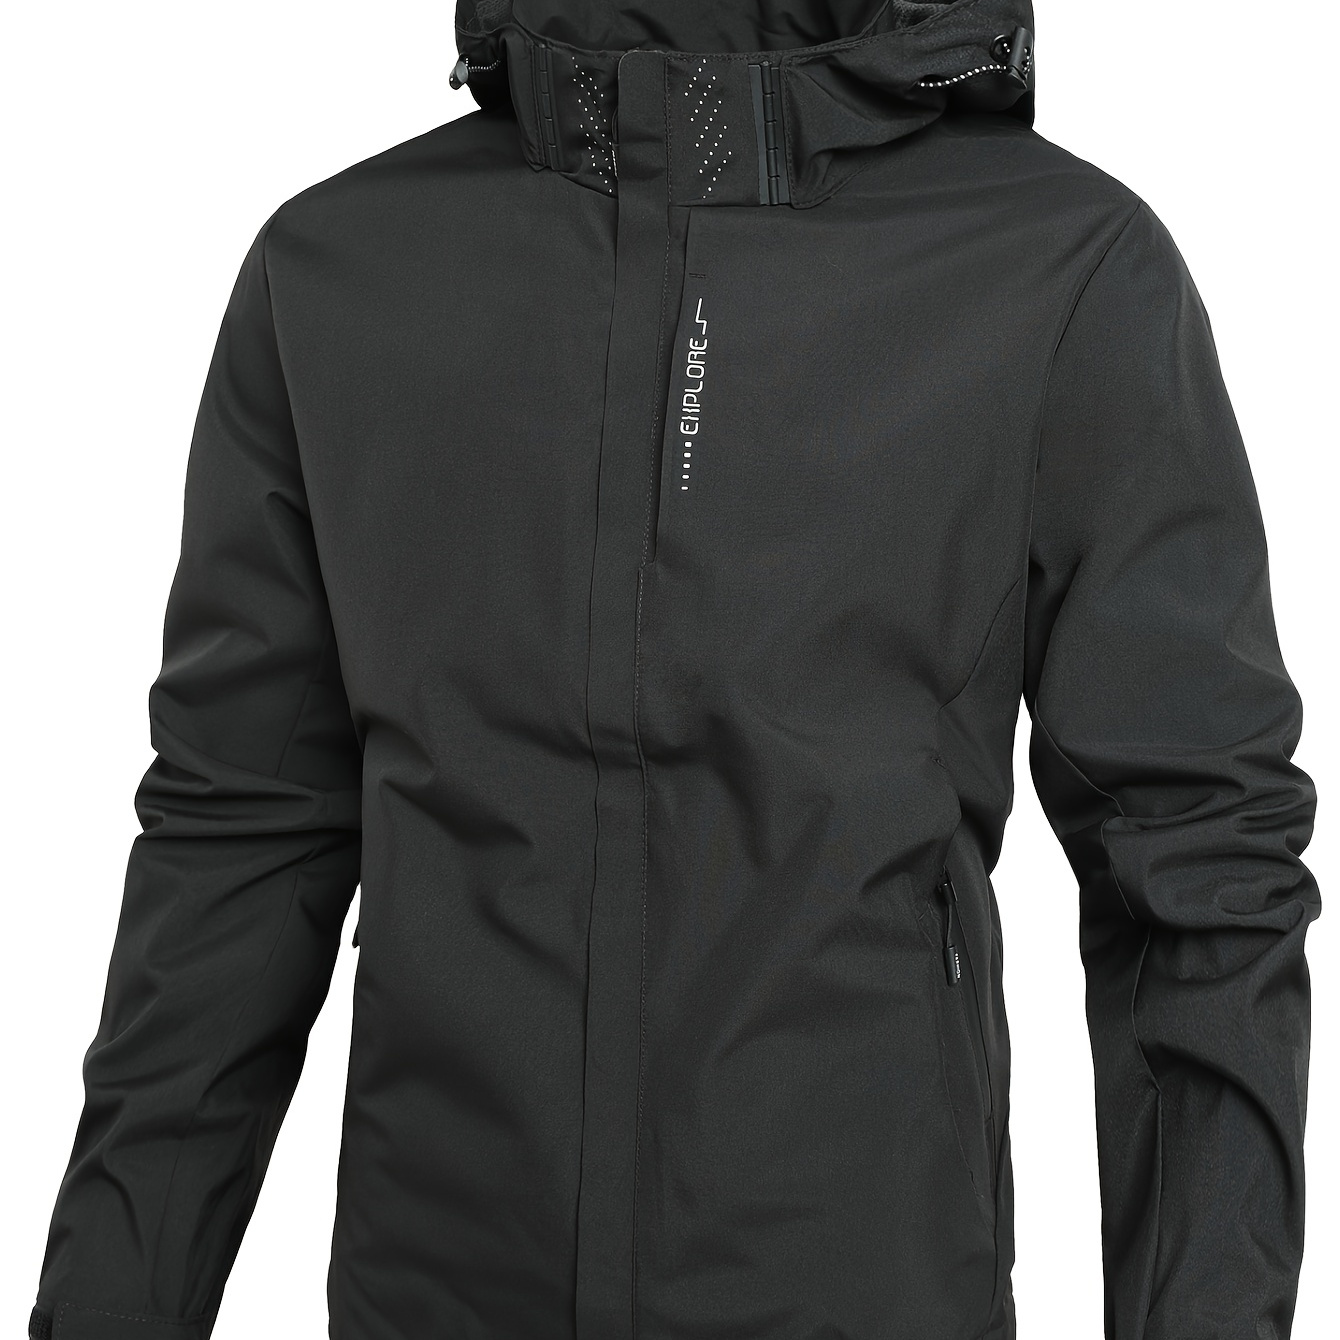 

Men's Lightweight Waterproof Rain Jacket, Hooded Shell Outdoor Raincoat Hiking Windbreaker Jacket Coat